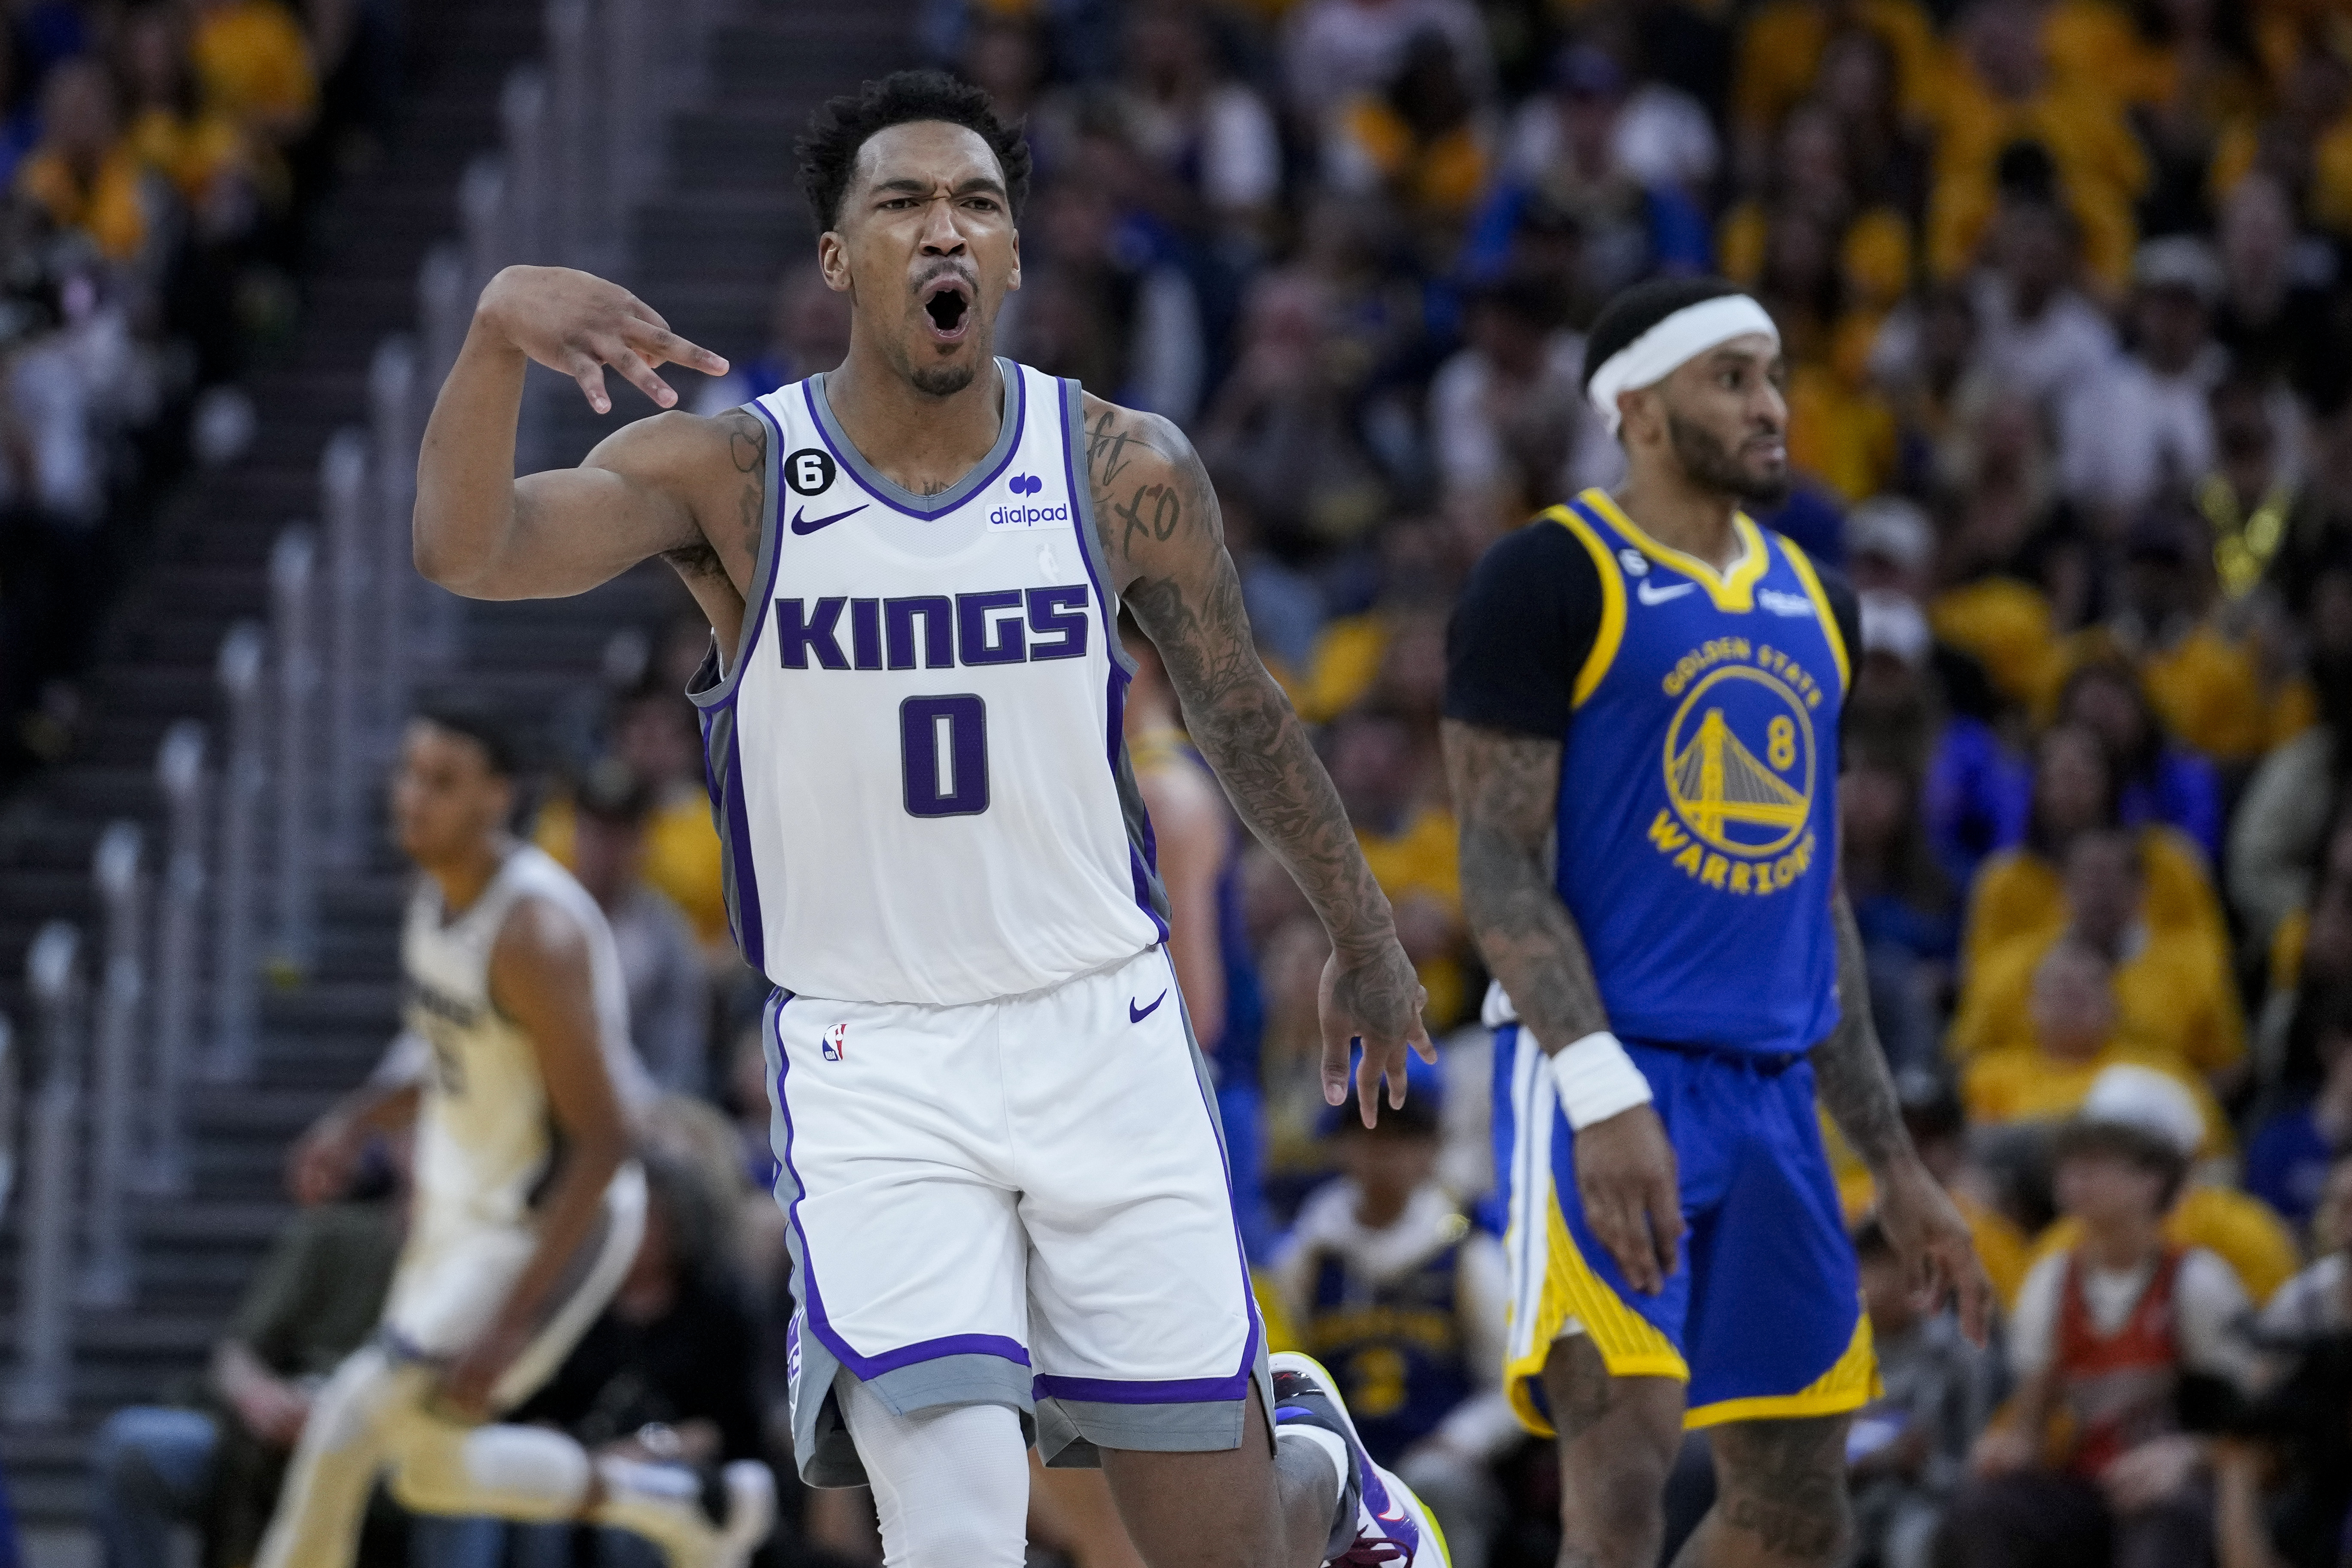 NBA's Sacramento Kings Sign Jersey Sponsorship Deal With Dialpad